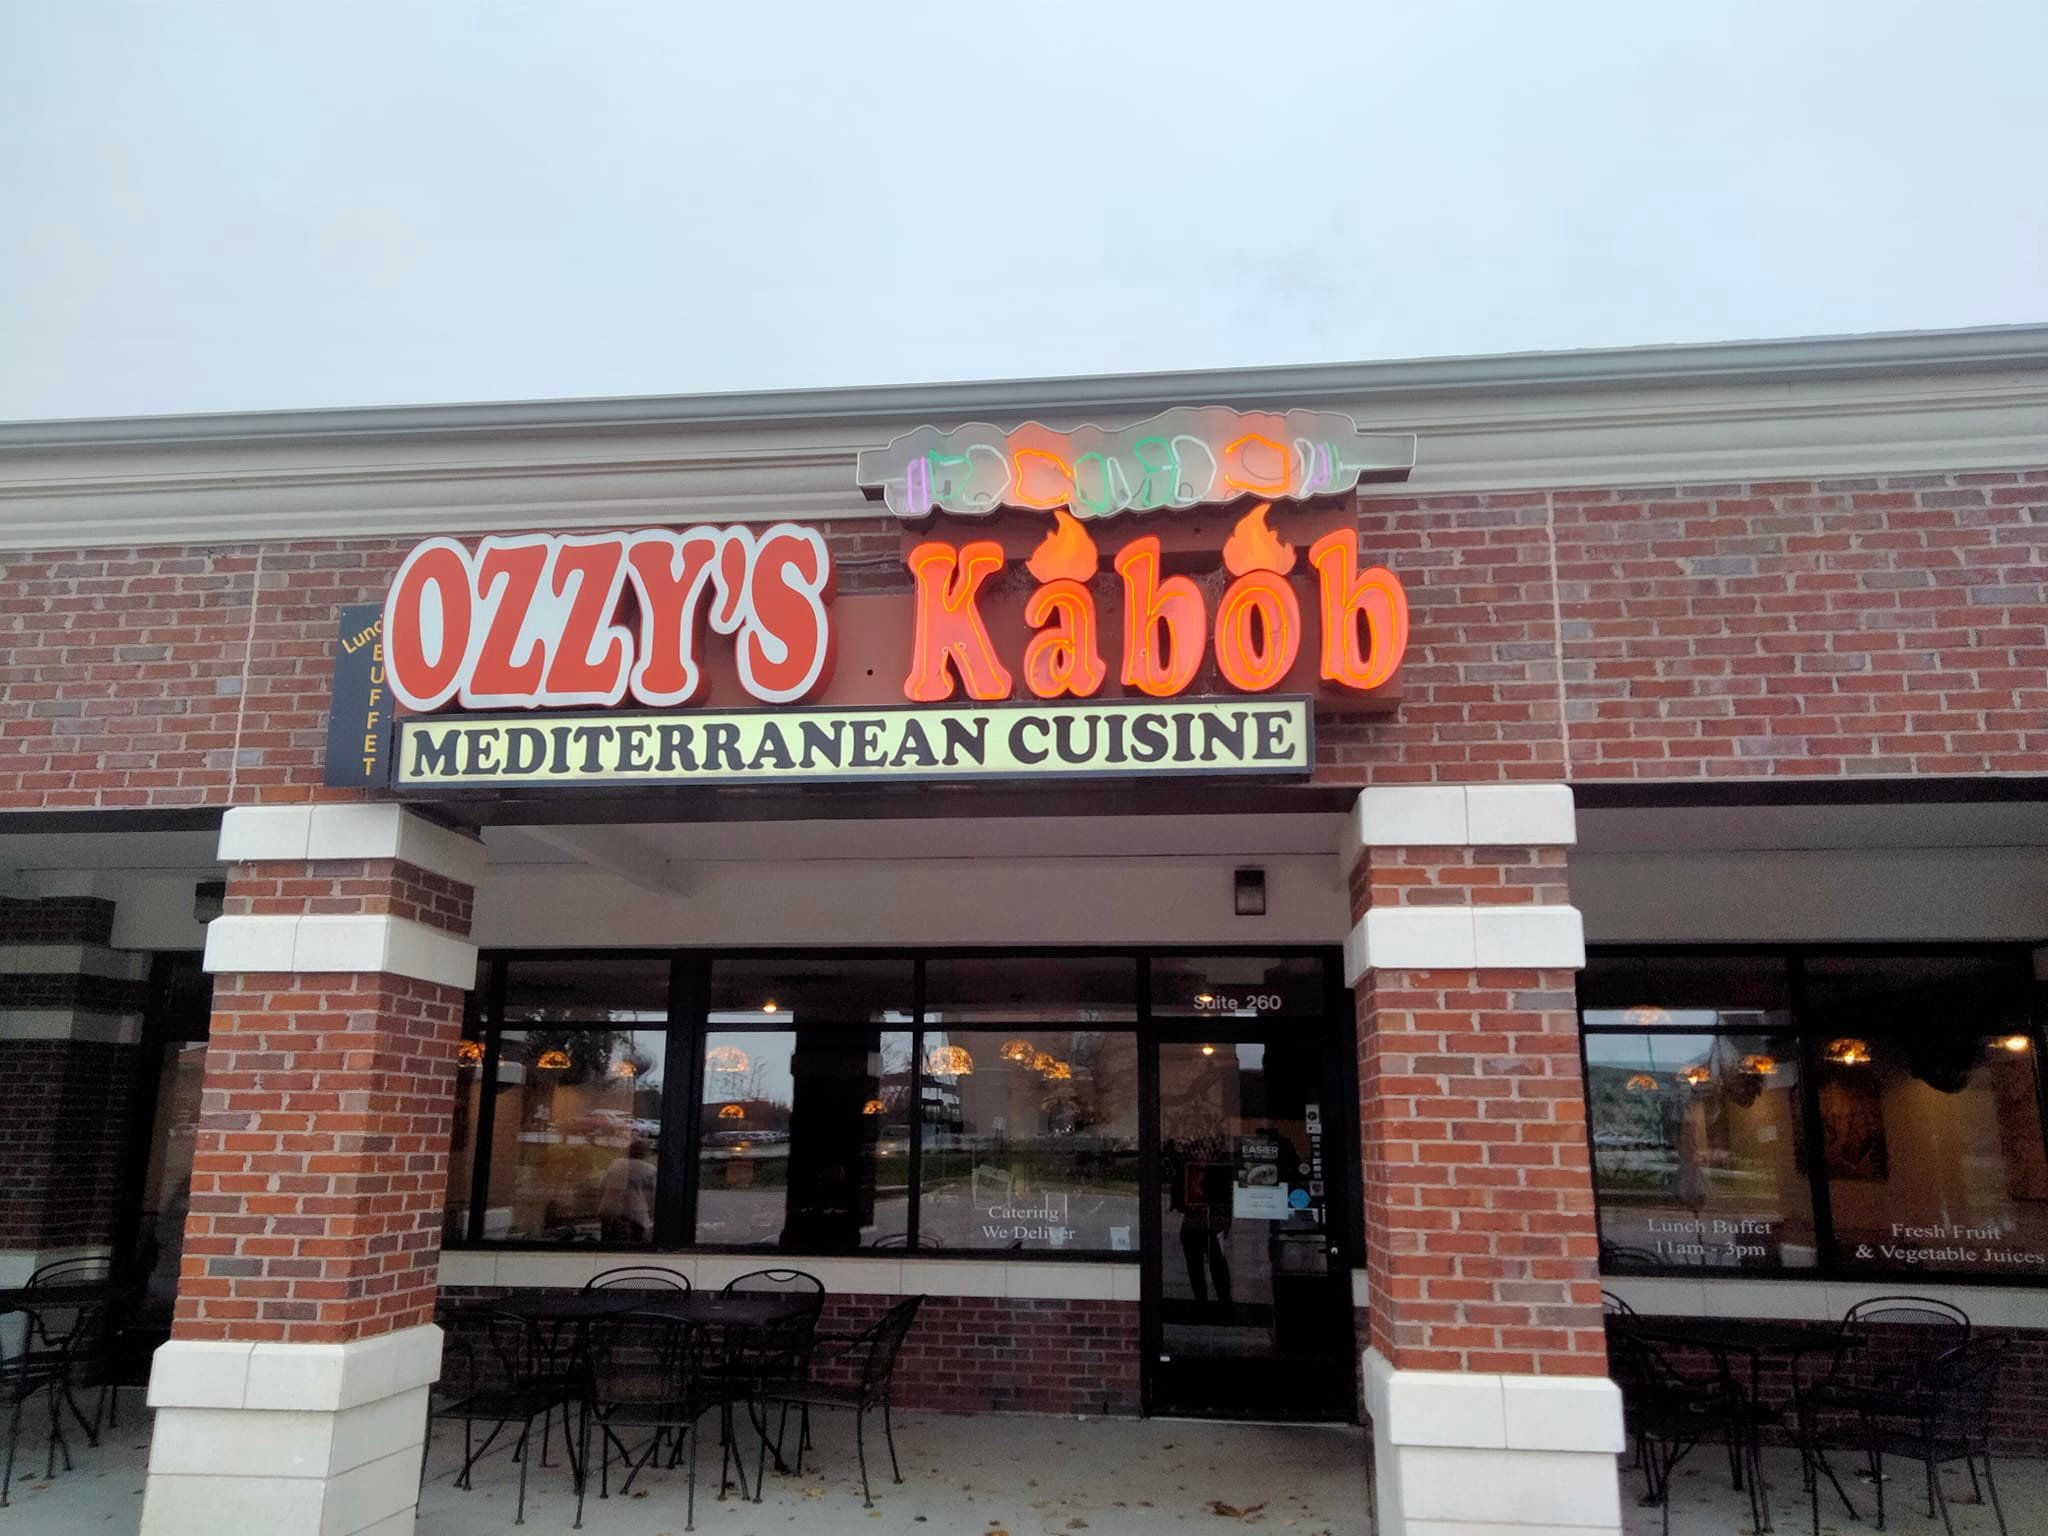 Mediterranean Food at its best, Ozzy's Kabob, Michigan